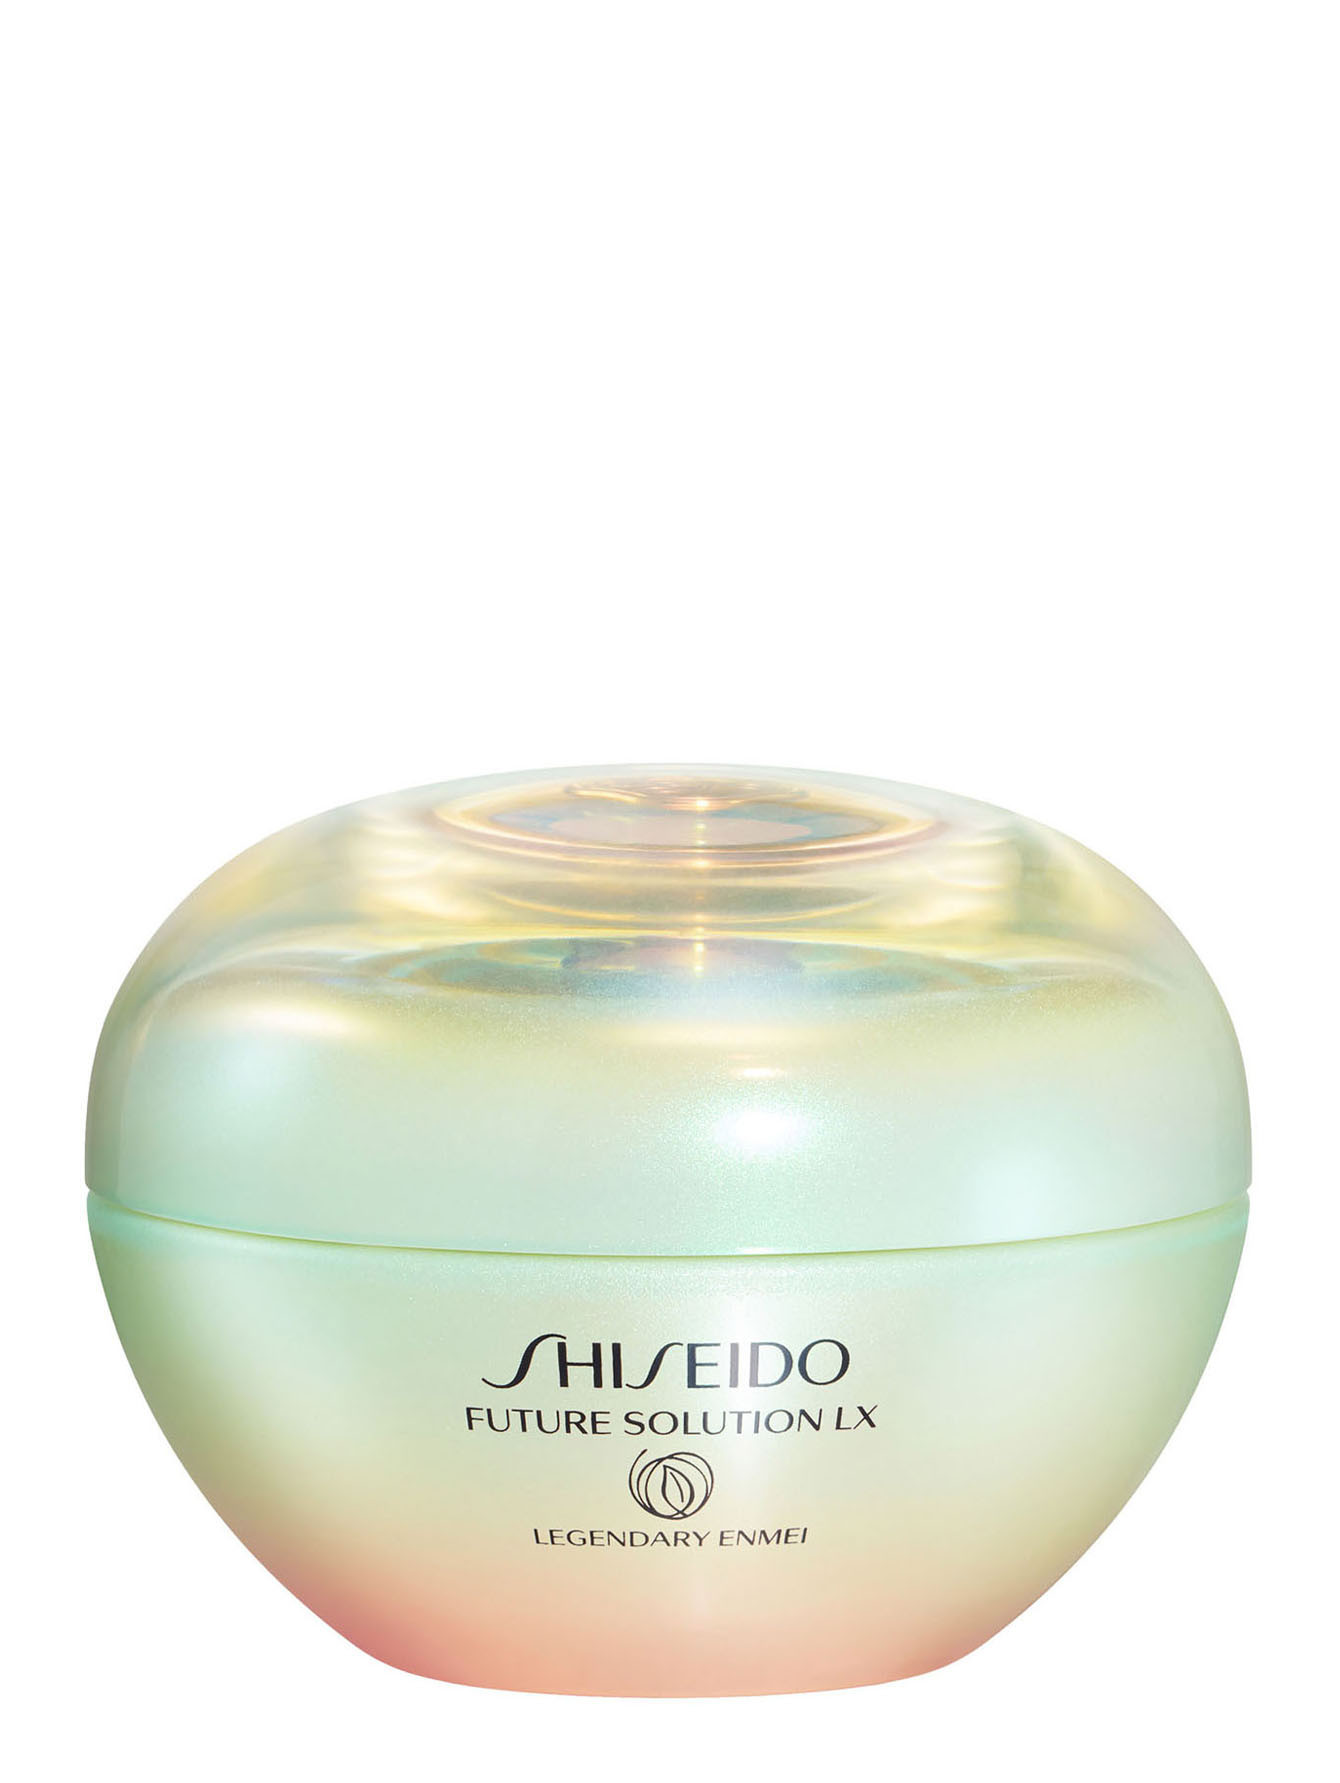 Shiseido Future solution LX. Крем Shiseido Future solution. Shiseido cыворотка для здорового сияния кожи Legendary Enmei Future solution LX. Future solution Legendary Cream. Shiseido lx